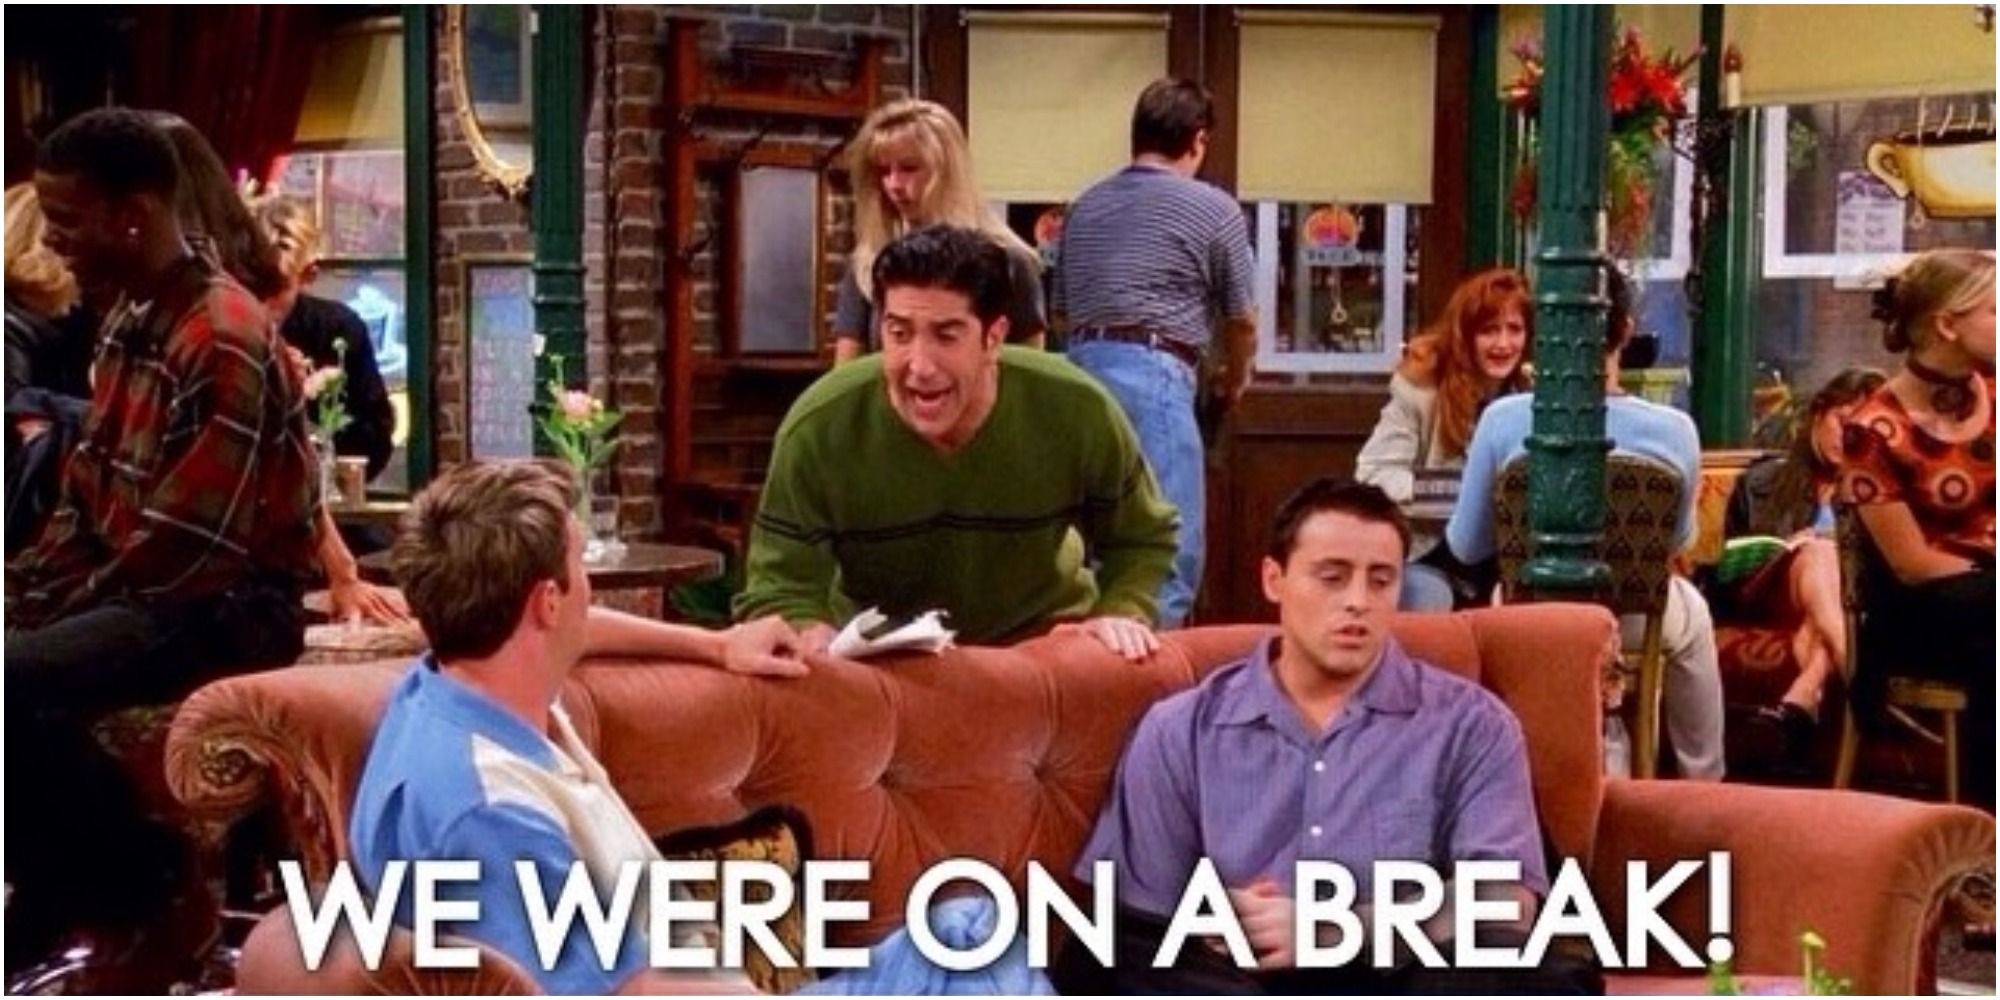 Ross repeats how he and Rachel were on a break